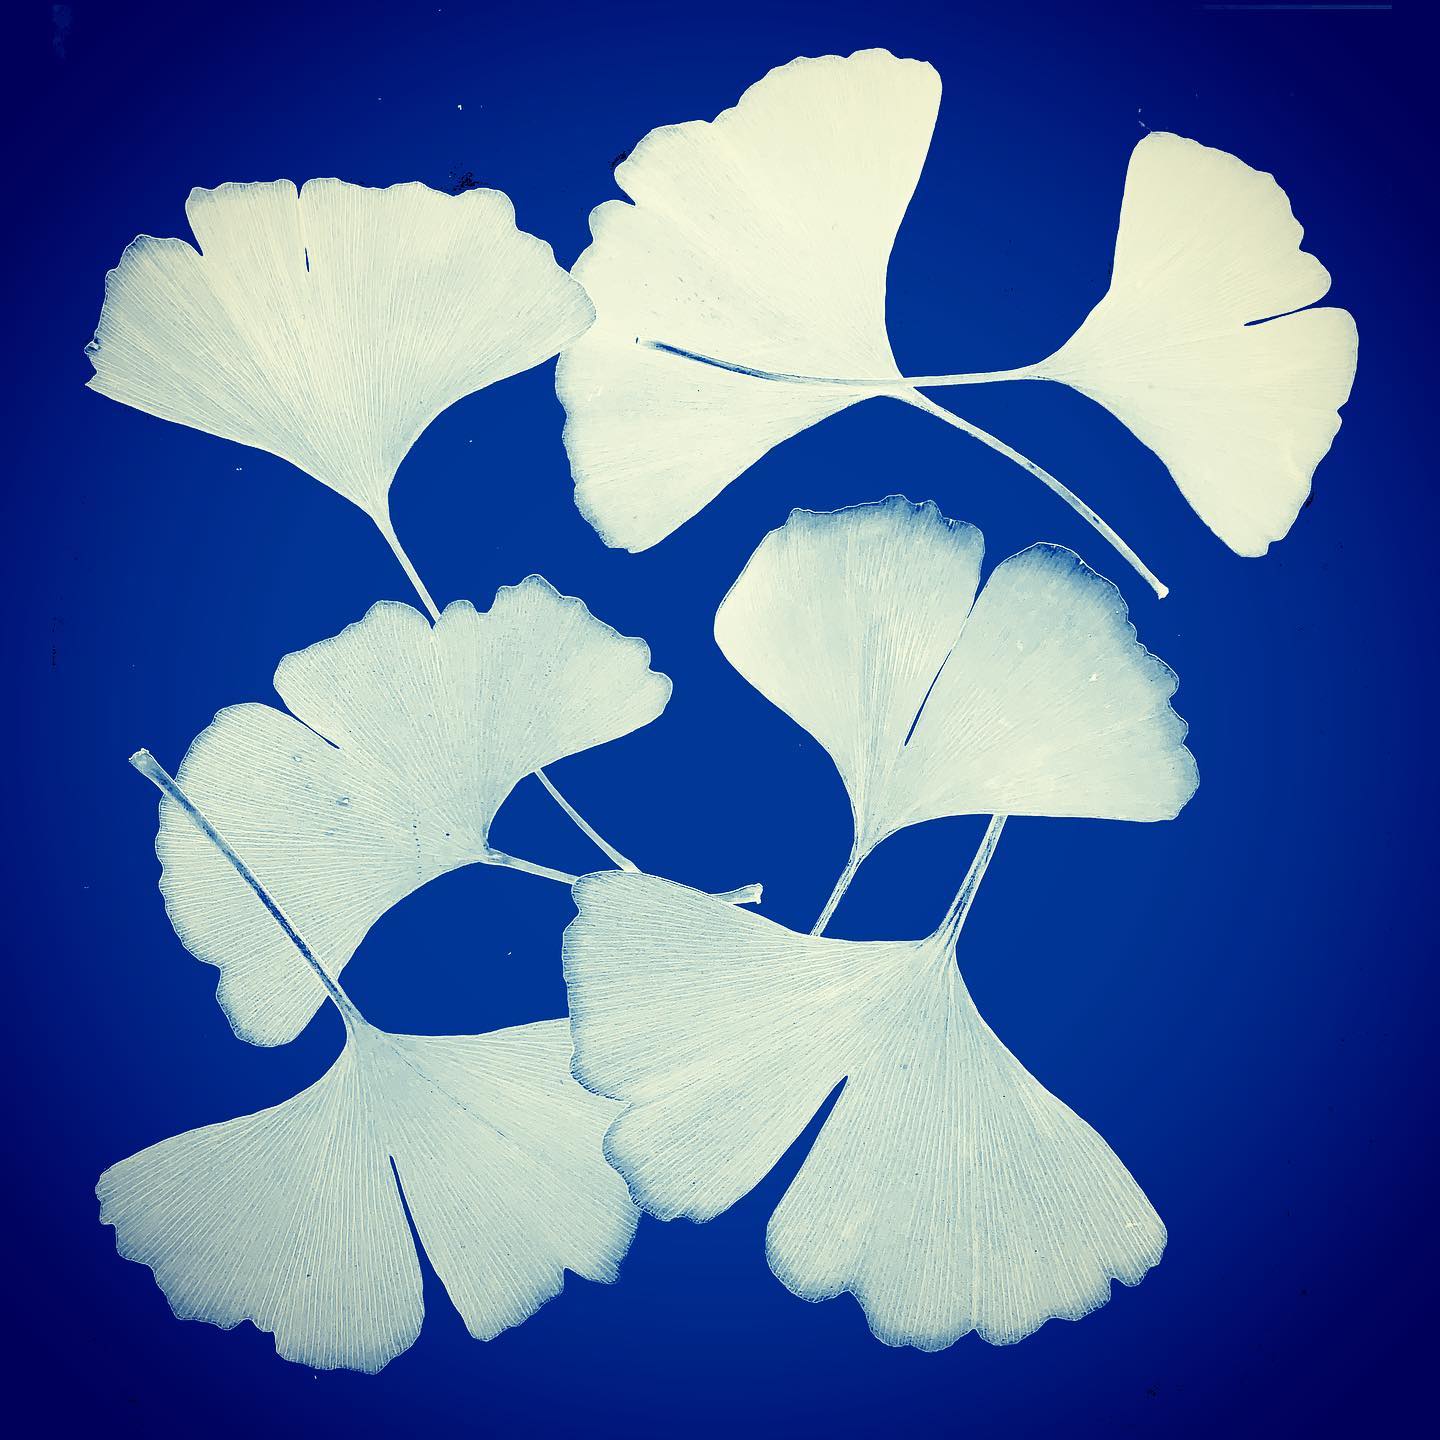 Rose leaves in black and white via Instagram